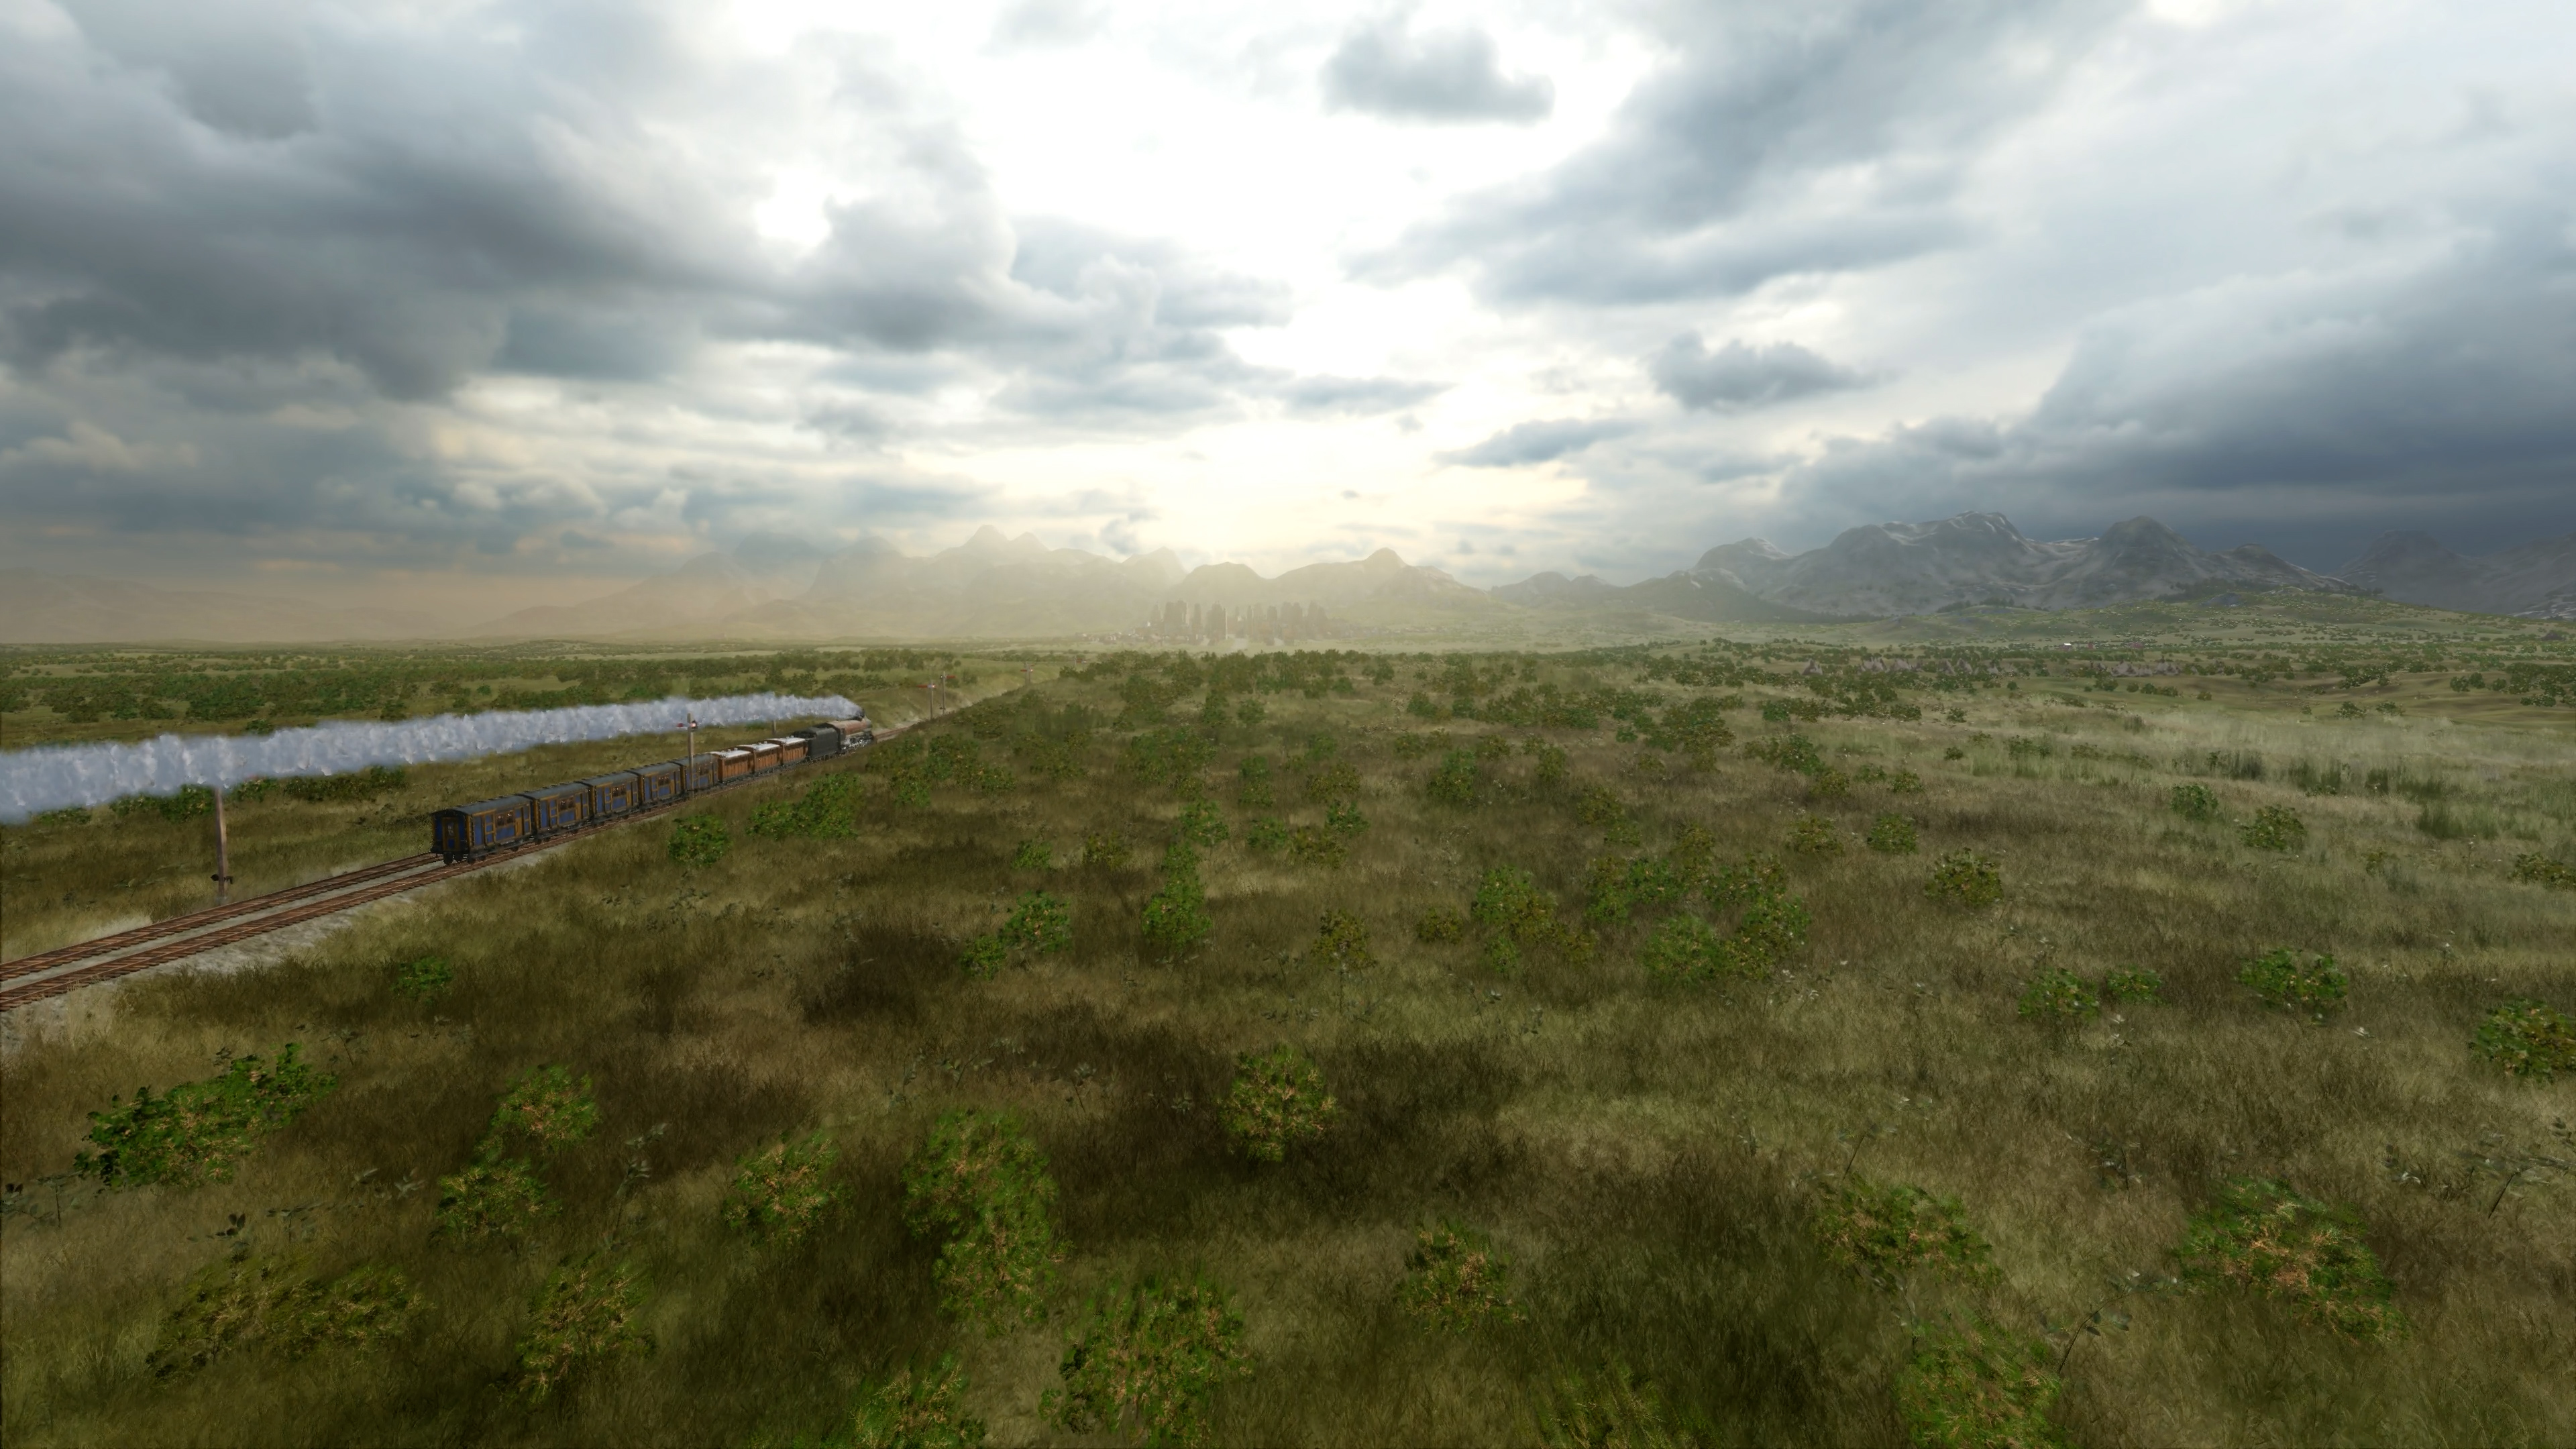 Railway Empire 2 - Deluxe Edition